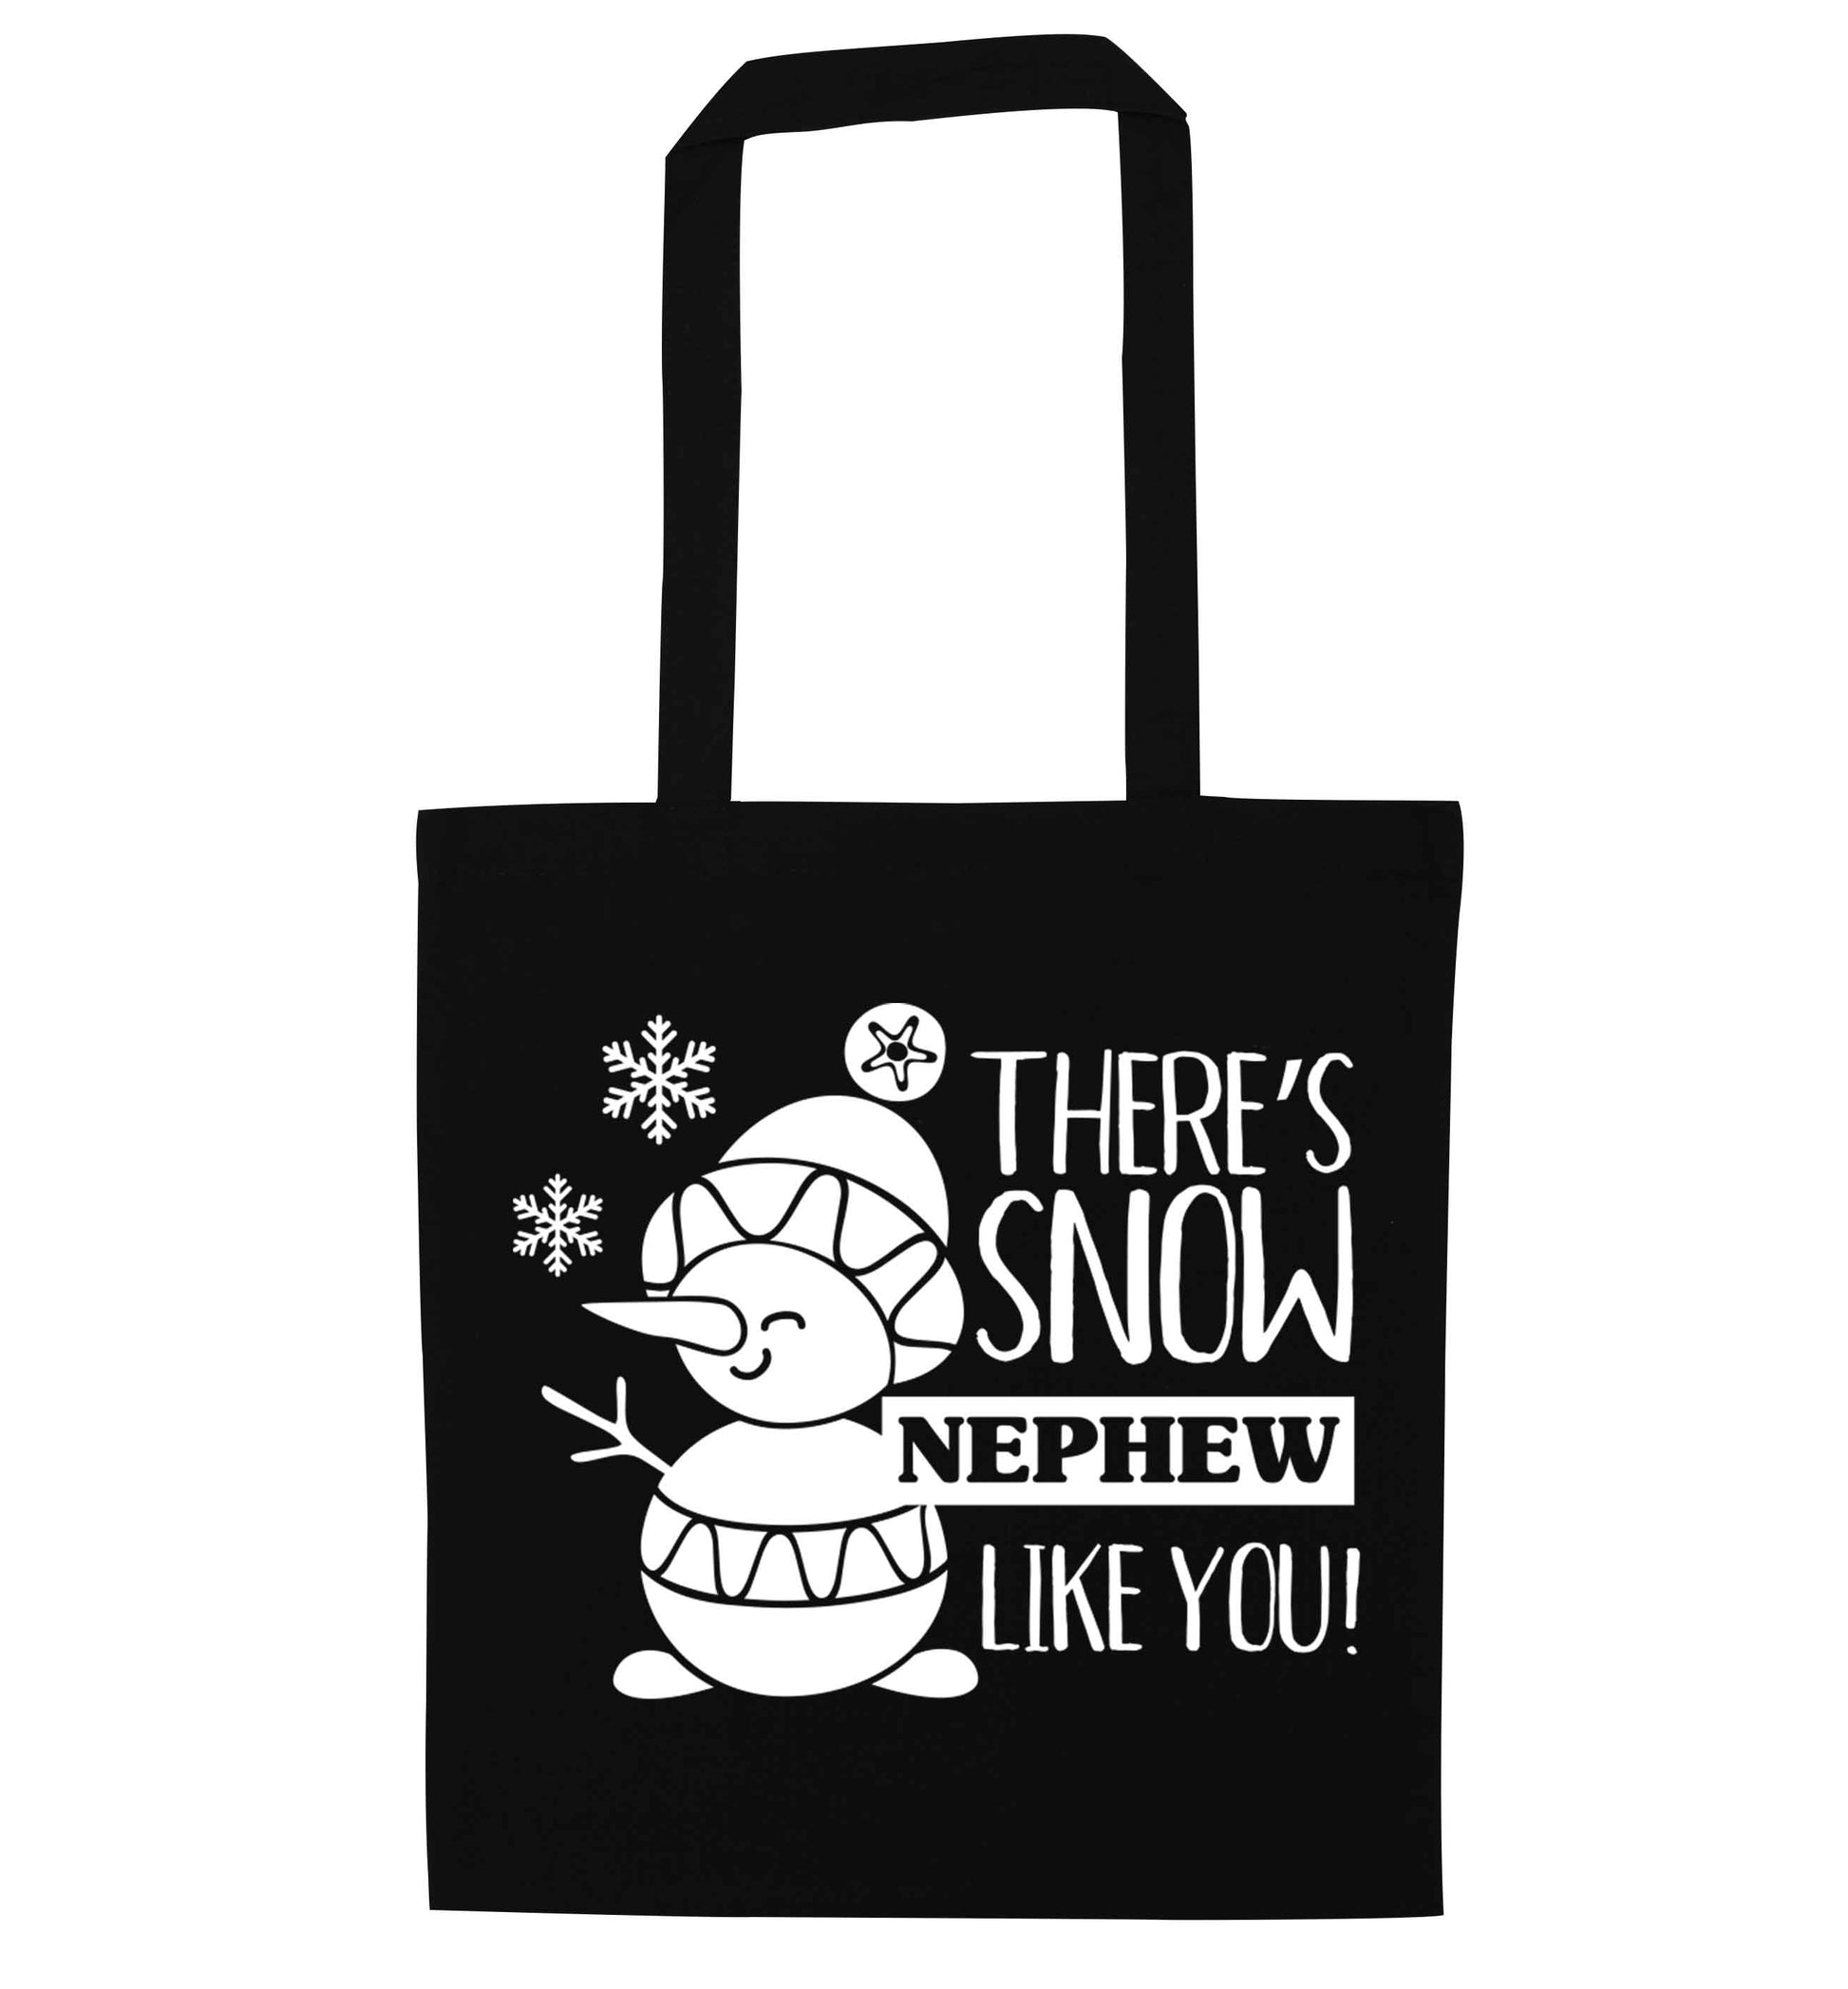 There's snow nephew like you black tote bag